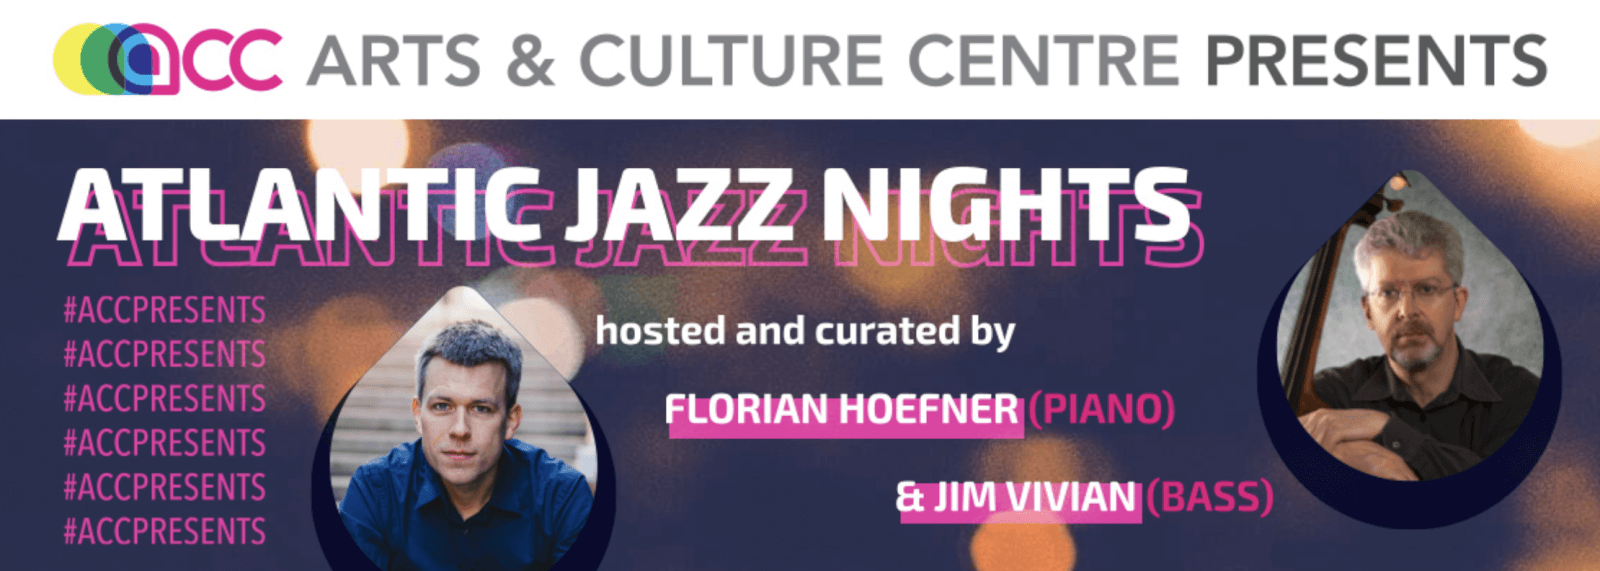 Atlantic Jazz Nights: Mike Murley & Ian Froman